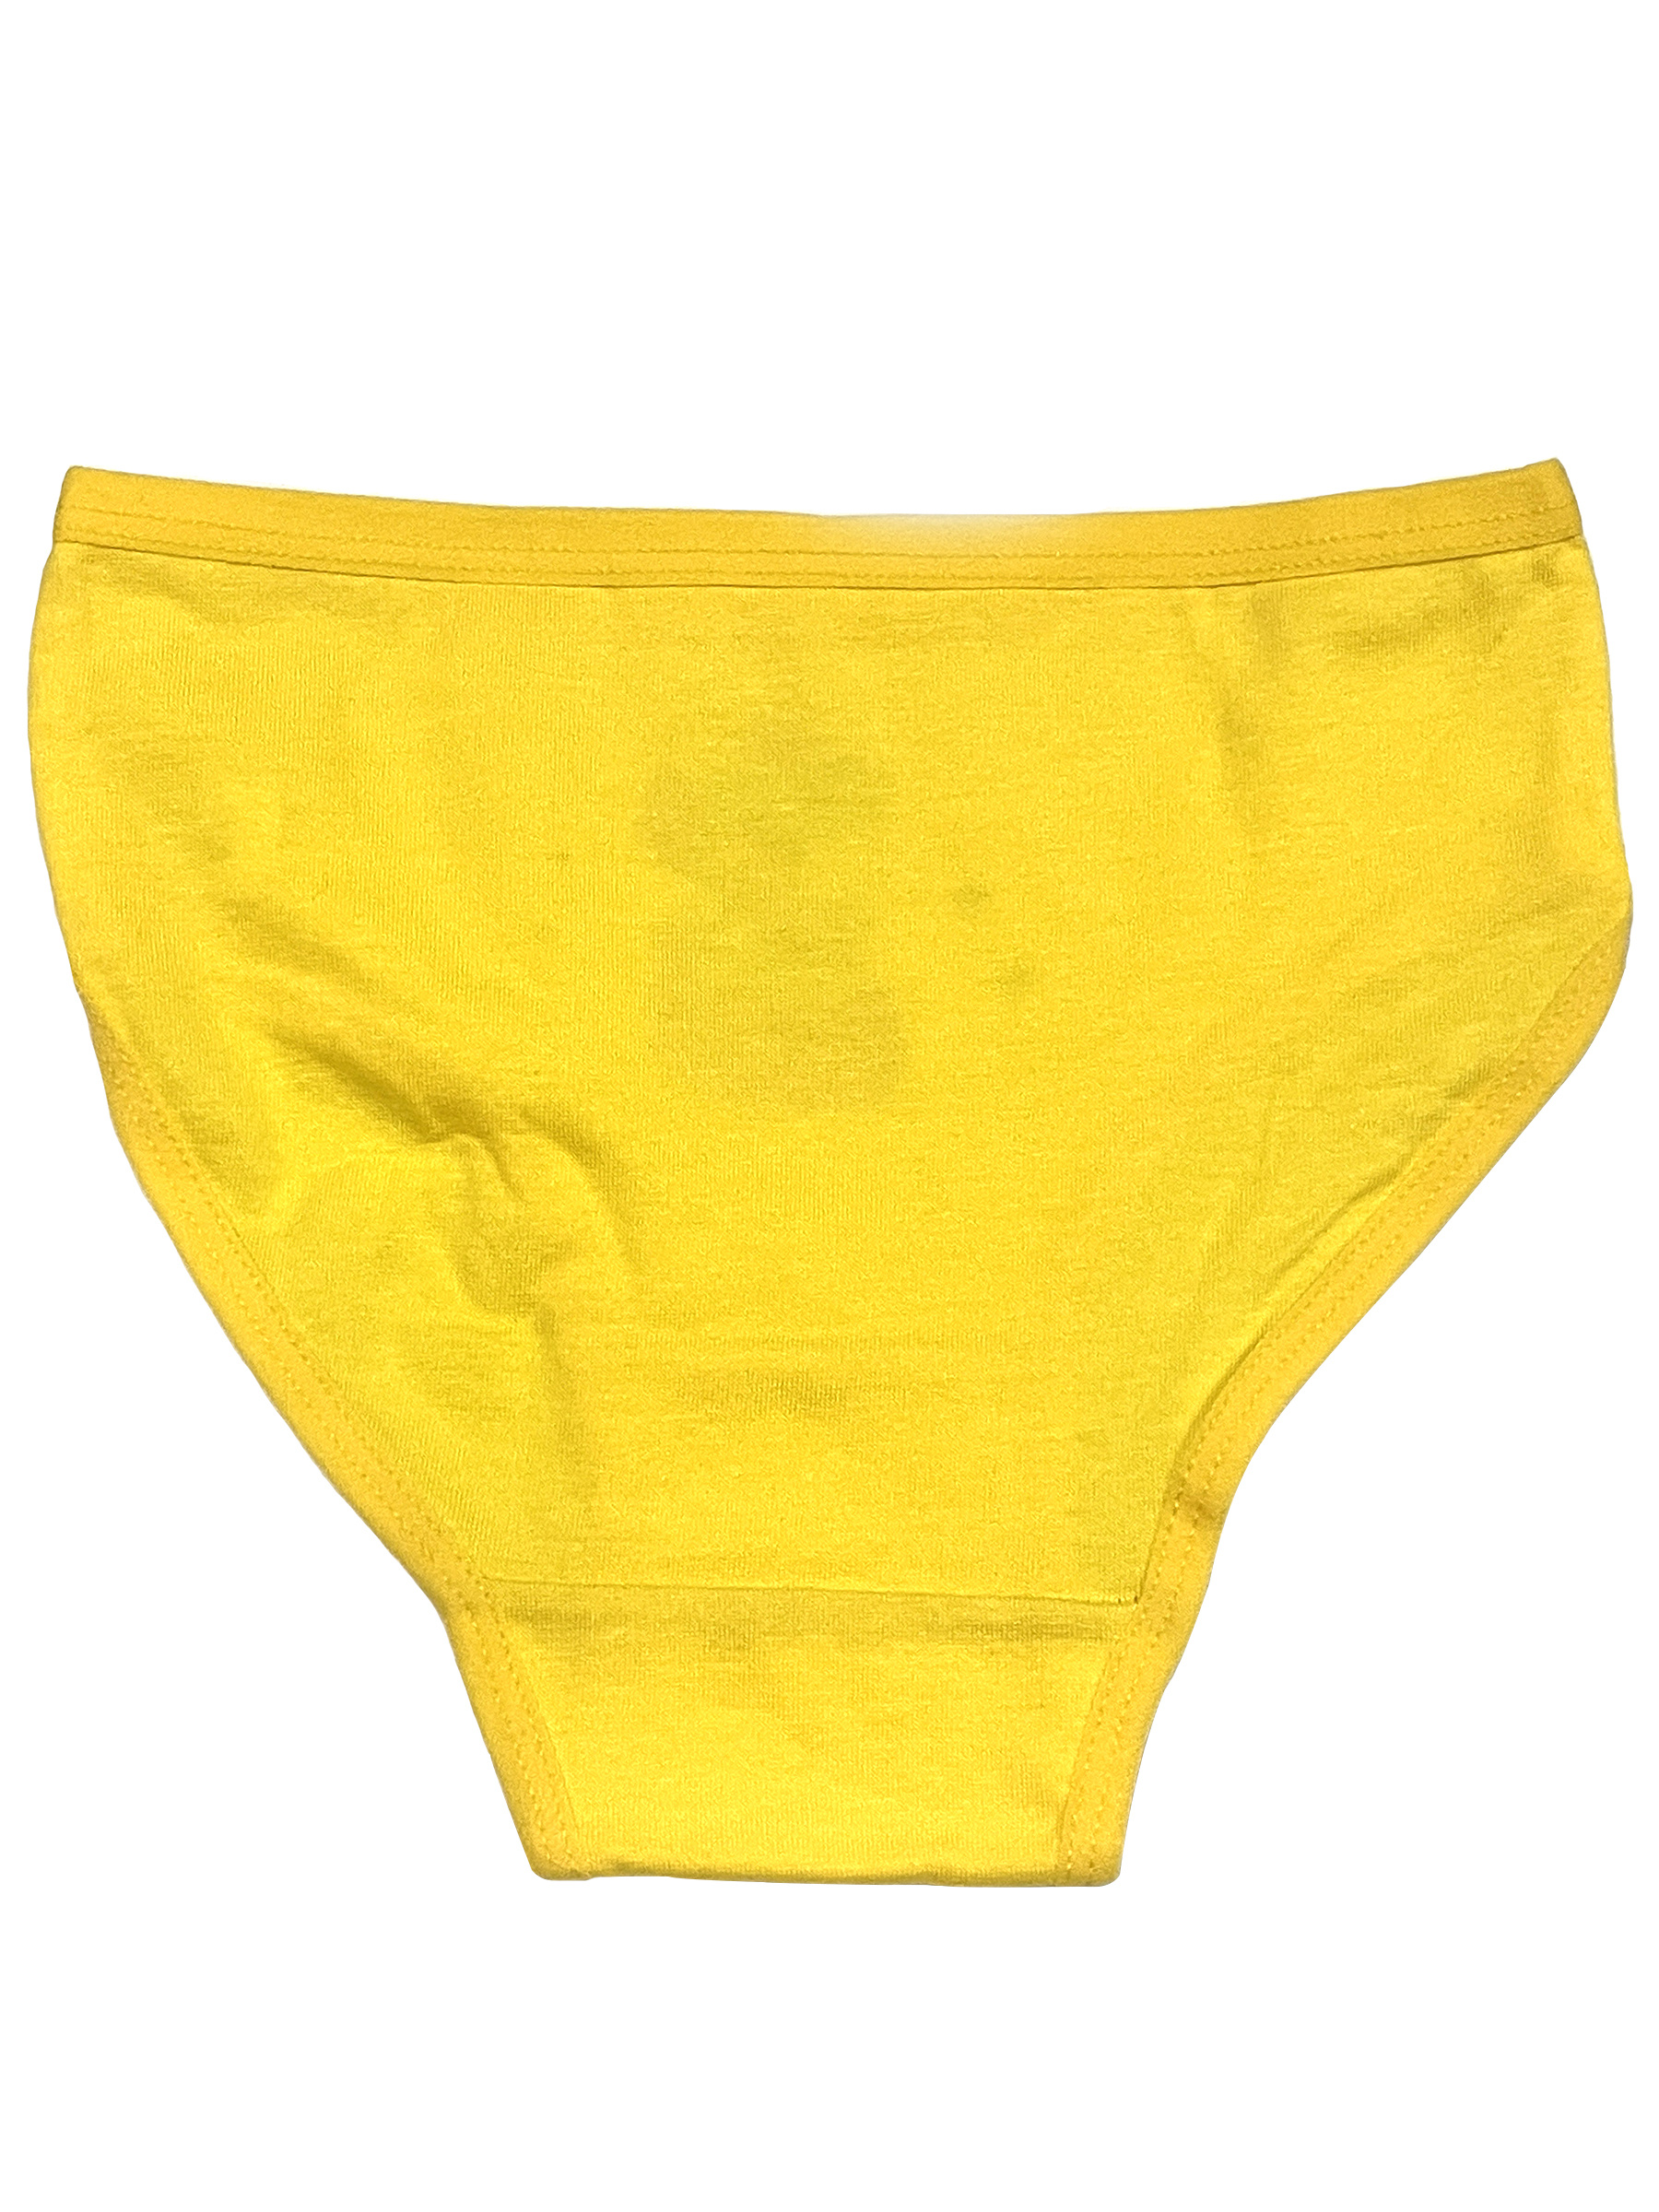 Little Girl Underwear On Yellow Background Stock Photo 1574382010